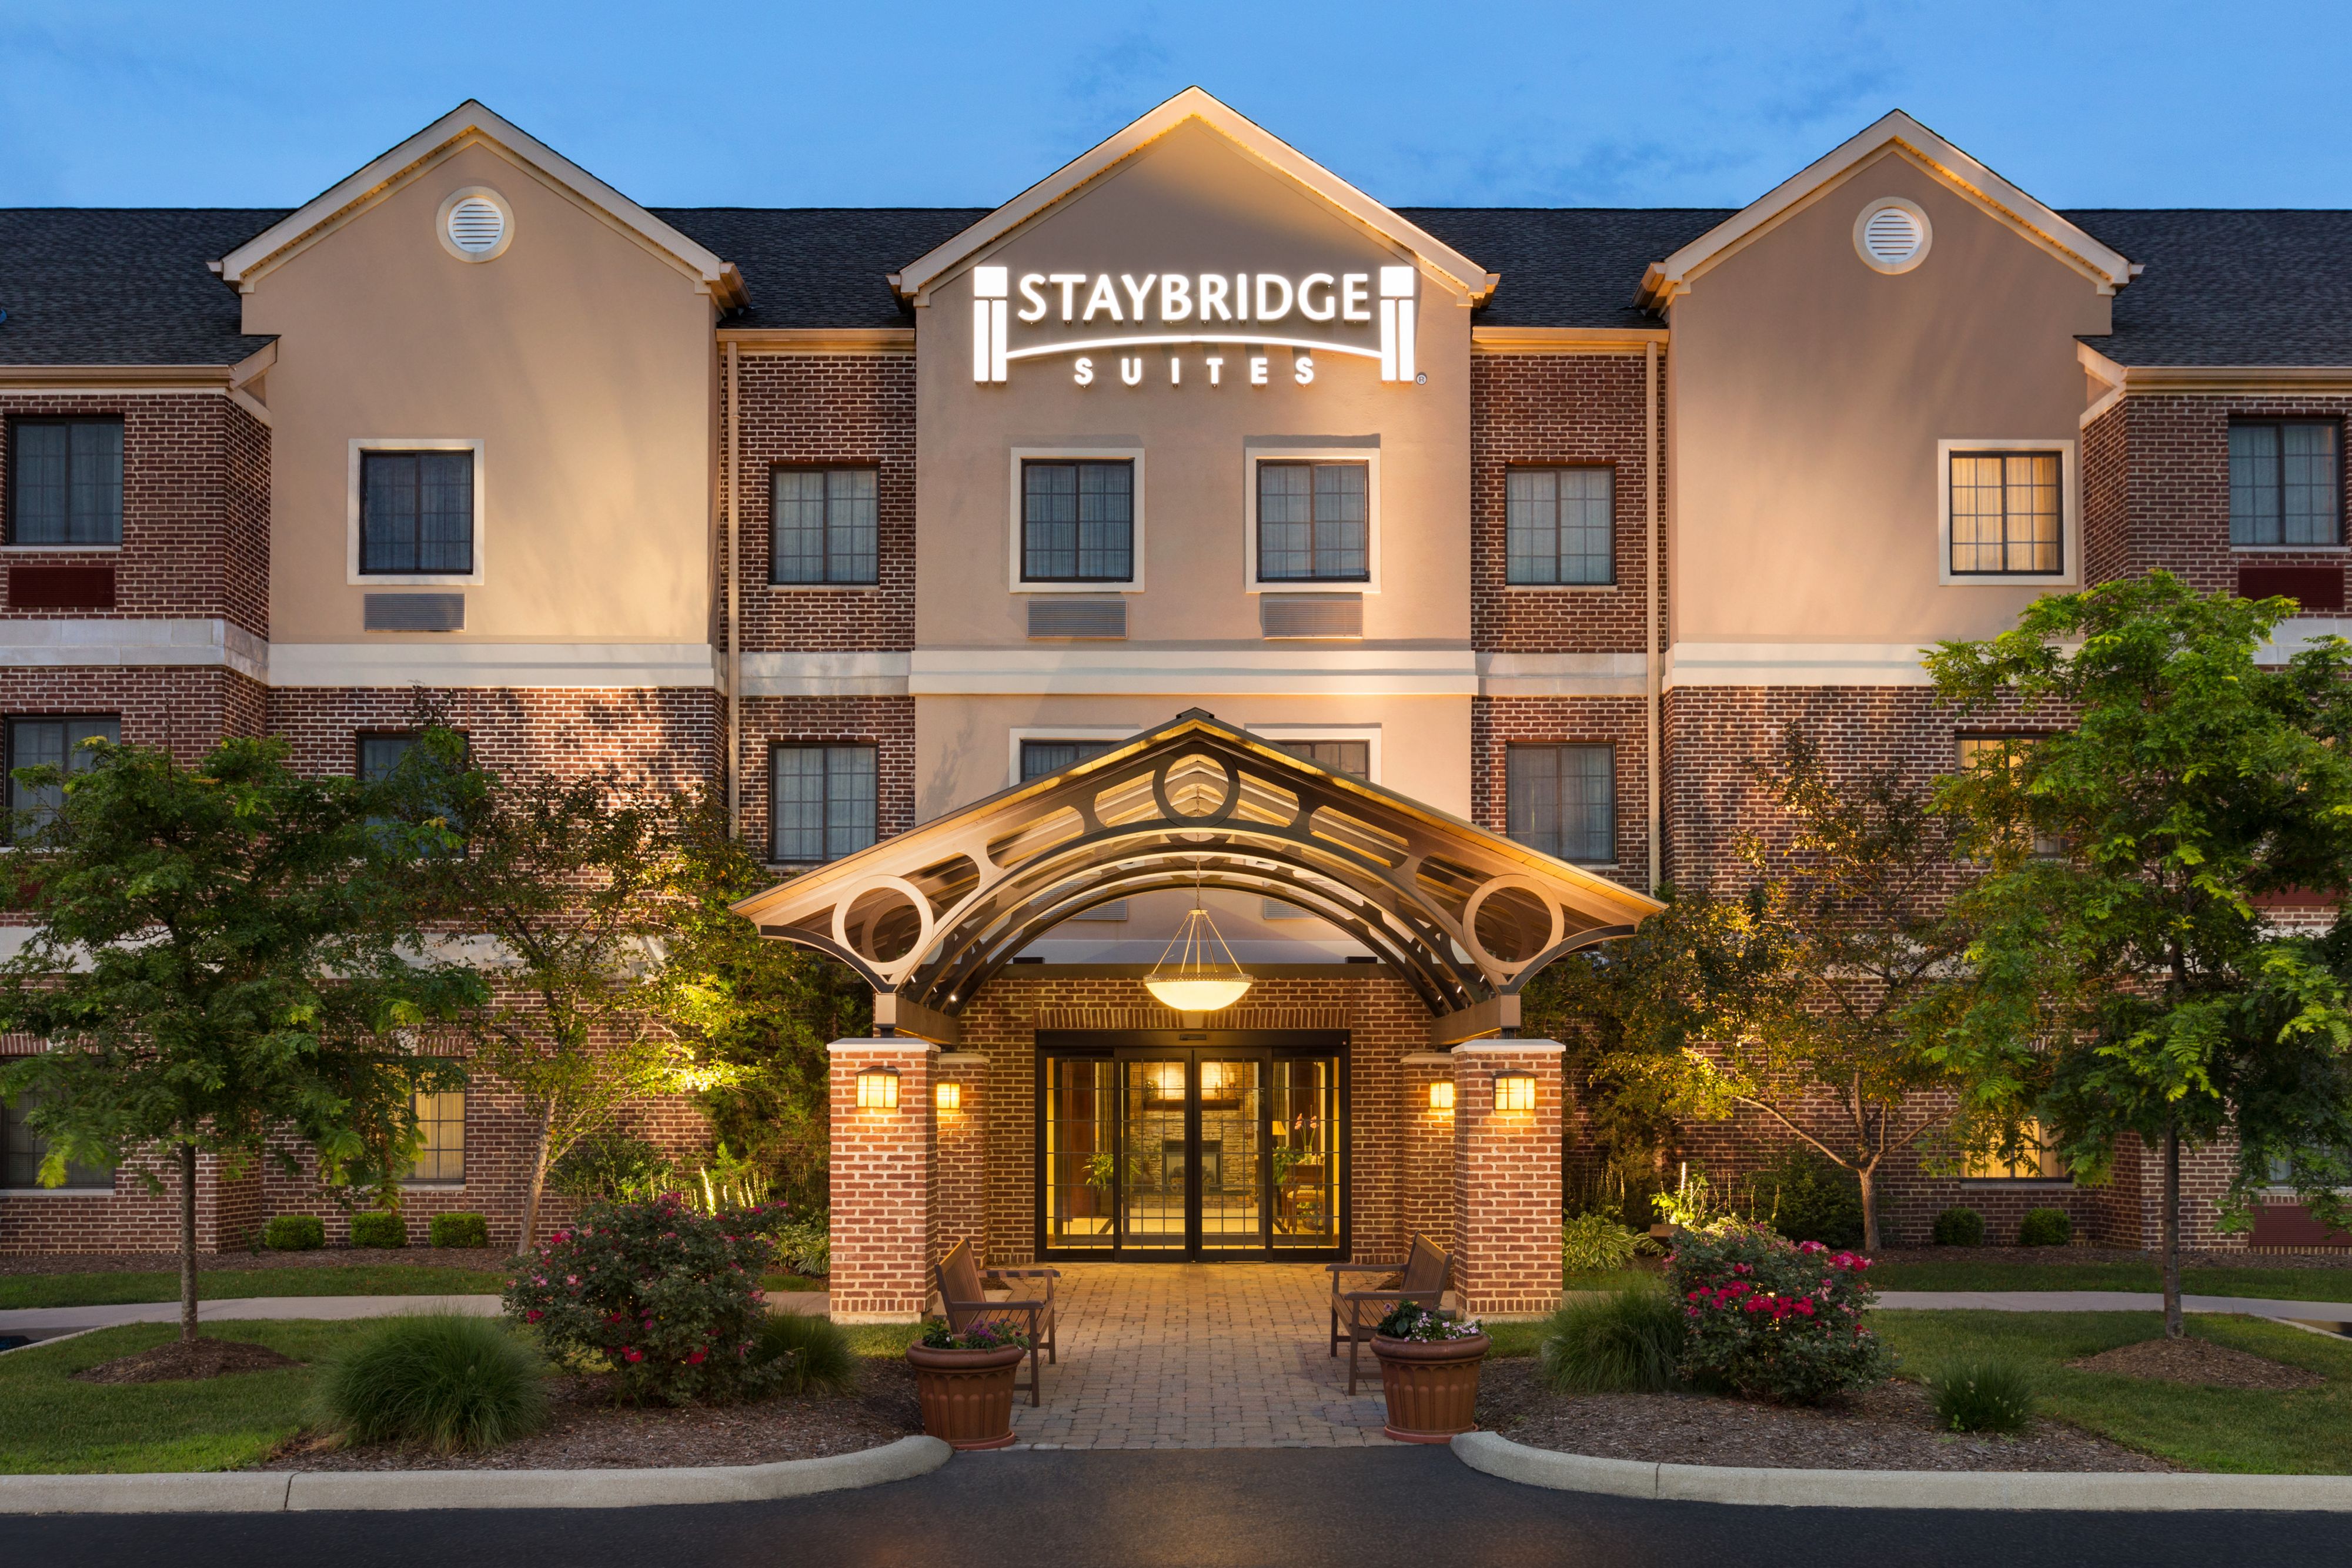 staybridge-suites-stow-5166305957-original.jpg